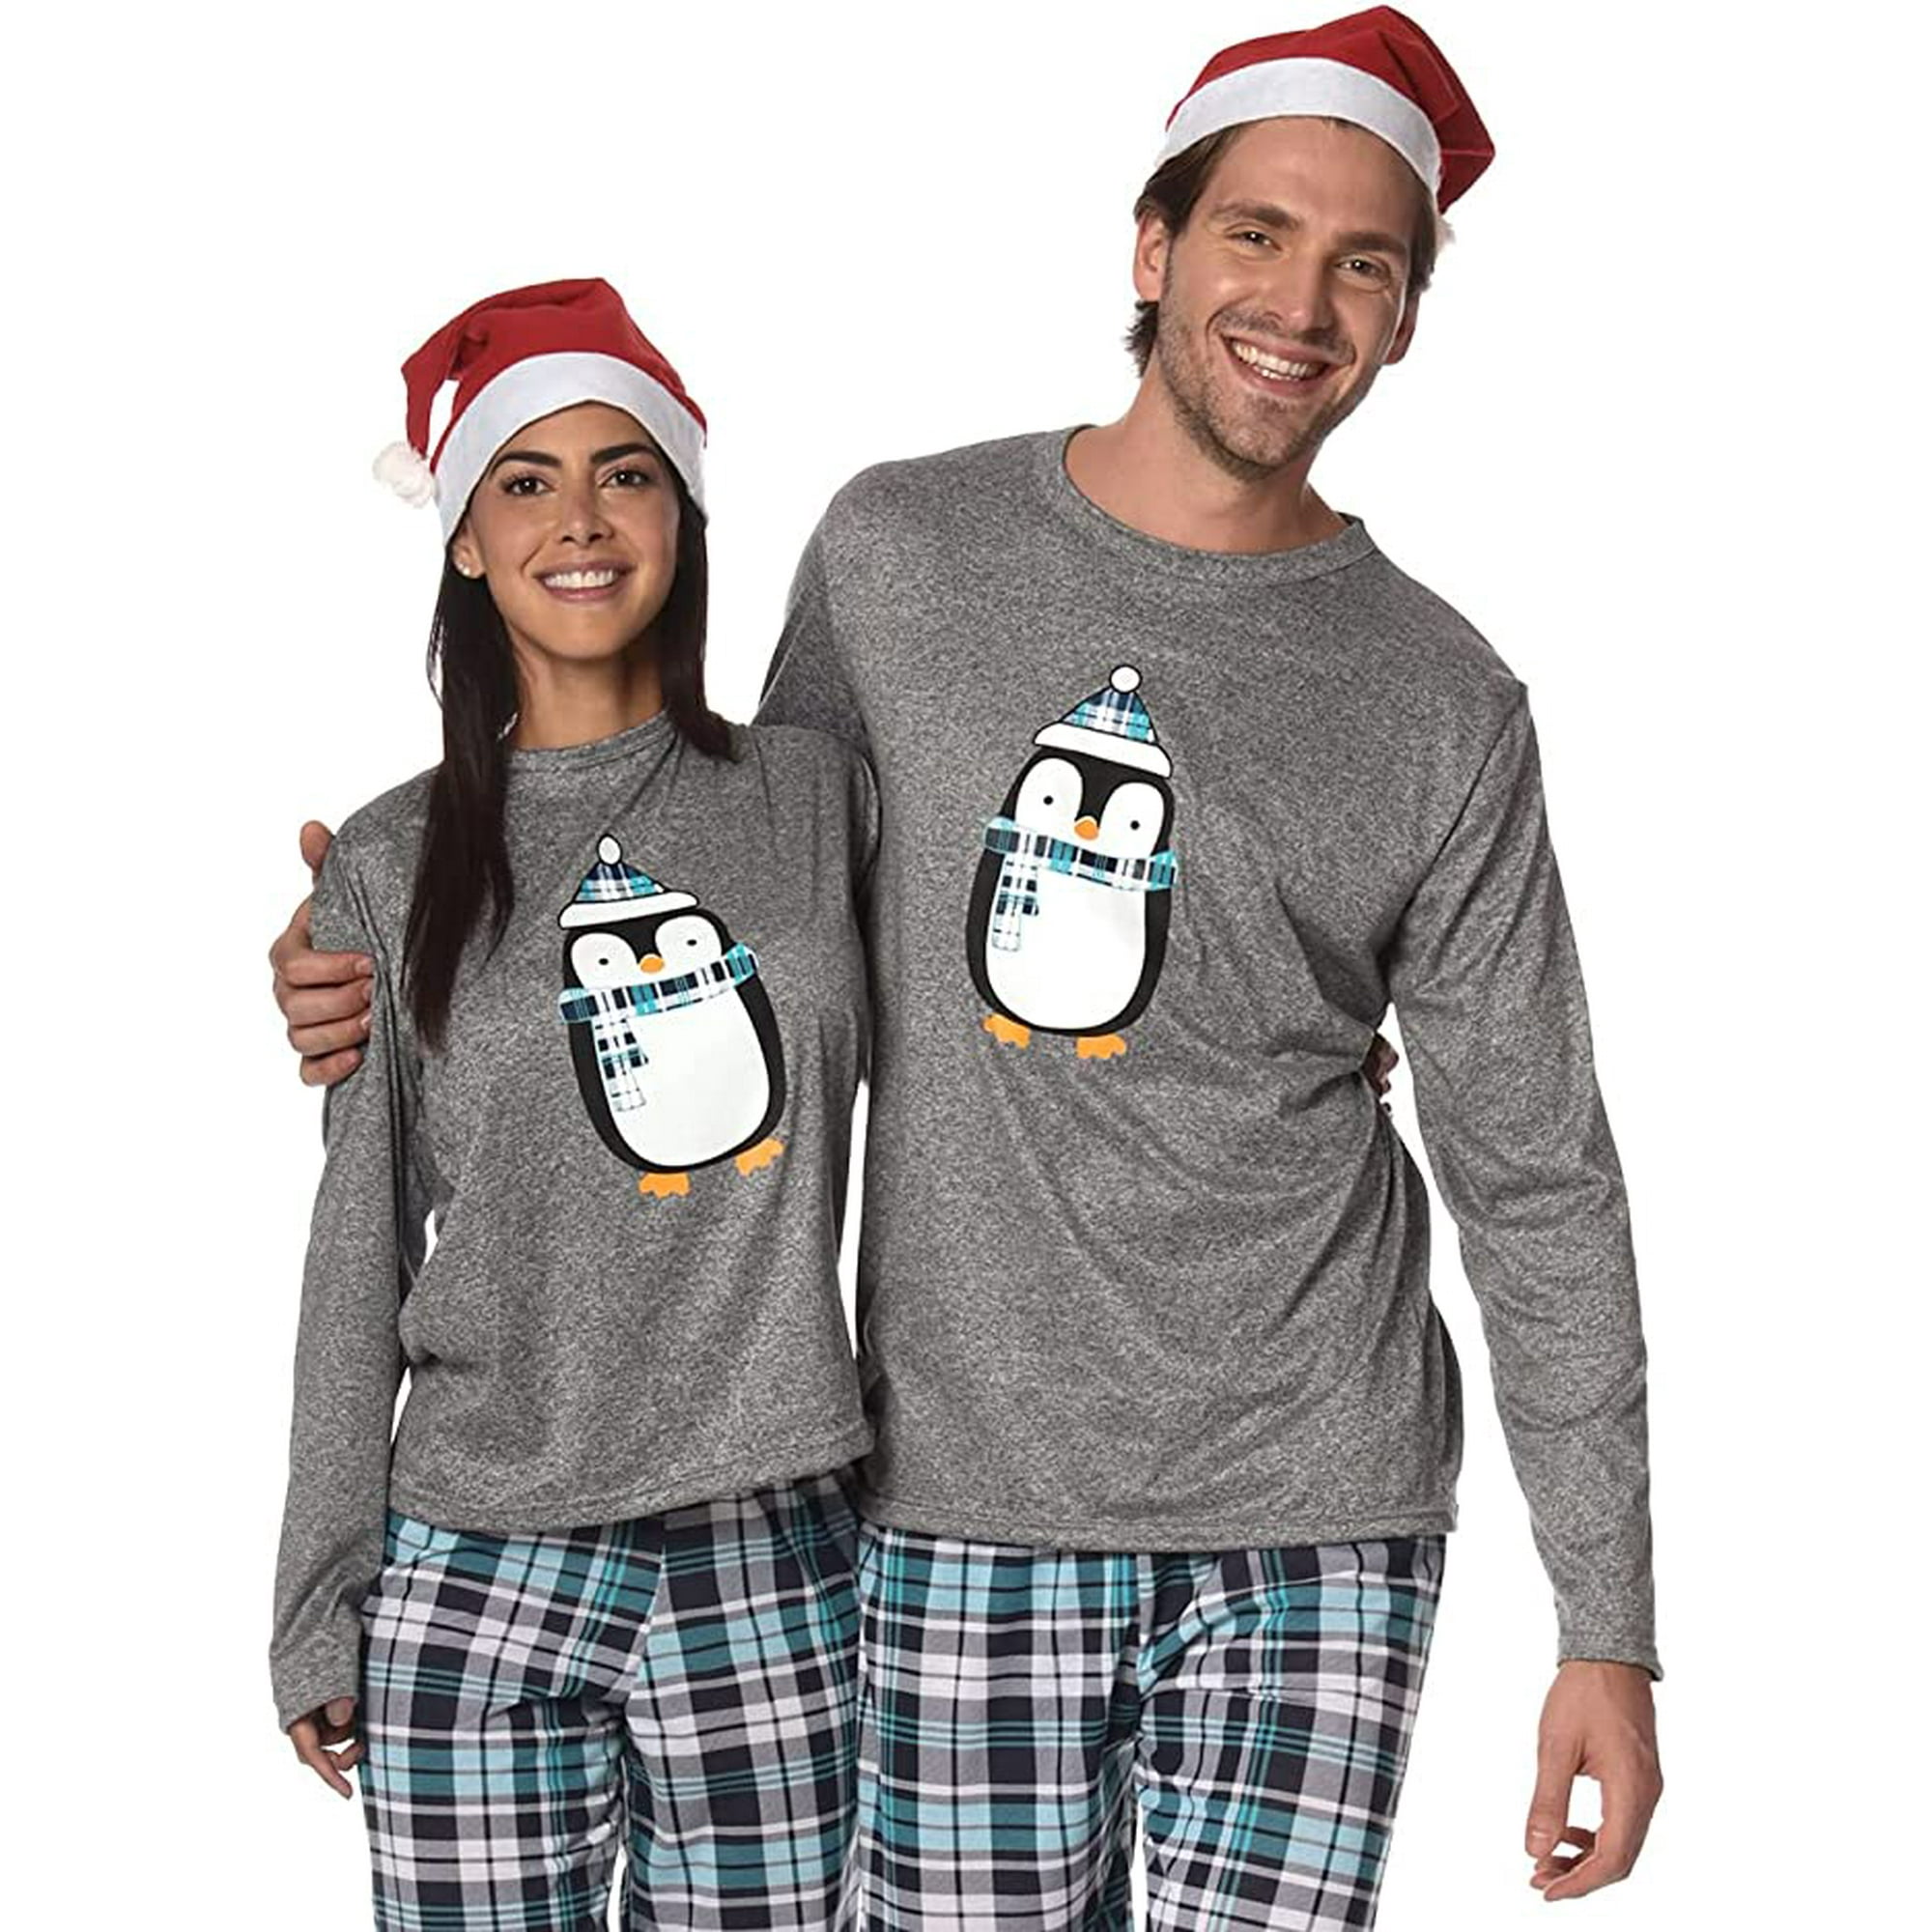 Pantalones de pijama de pingüino navideño para mujer